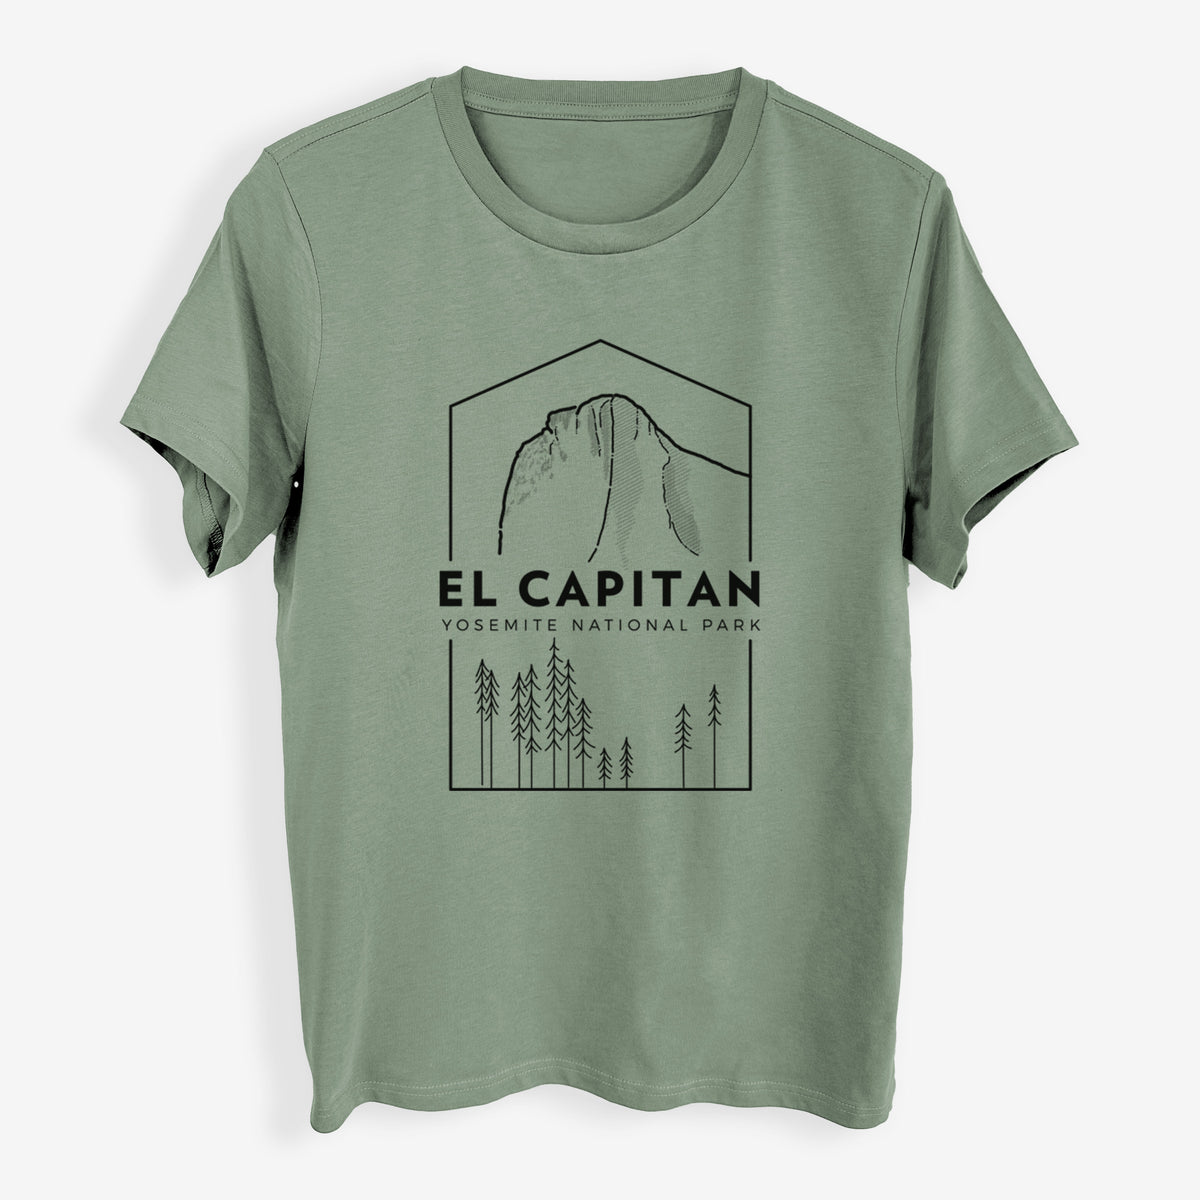 El Capitan - Yosemite National Park - Womens Everyday Maple Tee